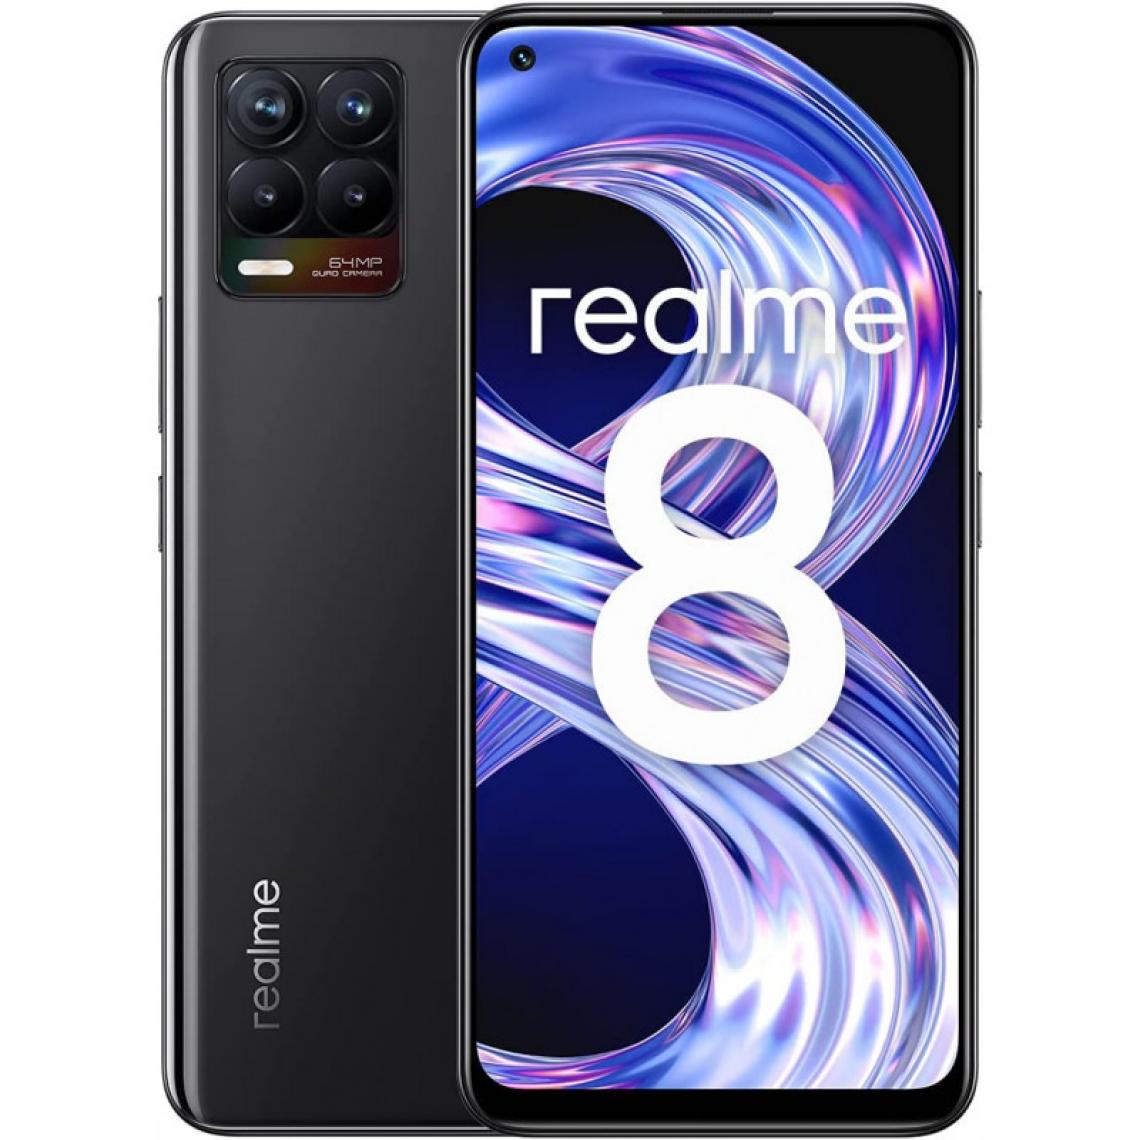 Realme - Realme 8 (Double Sim - Ecran 6.4'' - 64Go, 4Go RAM) Noir - Smartphone Android